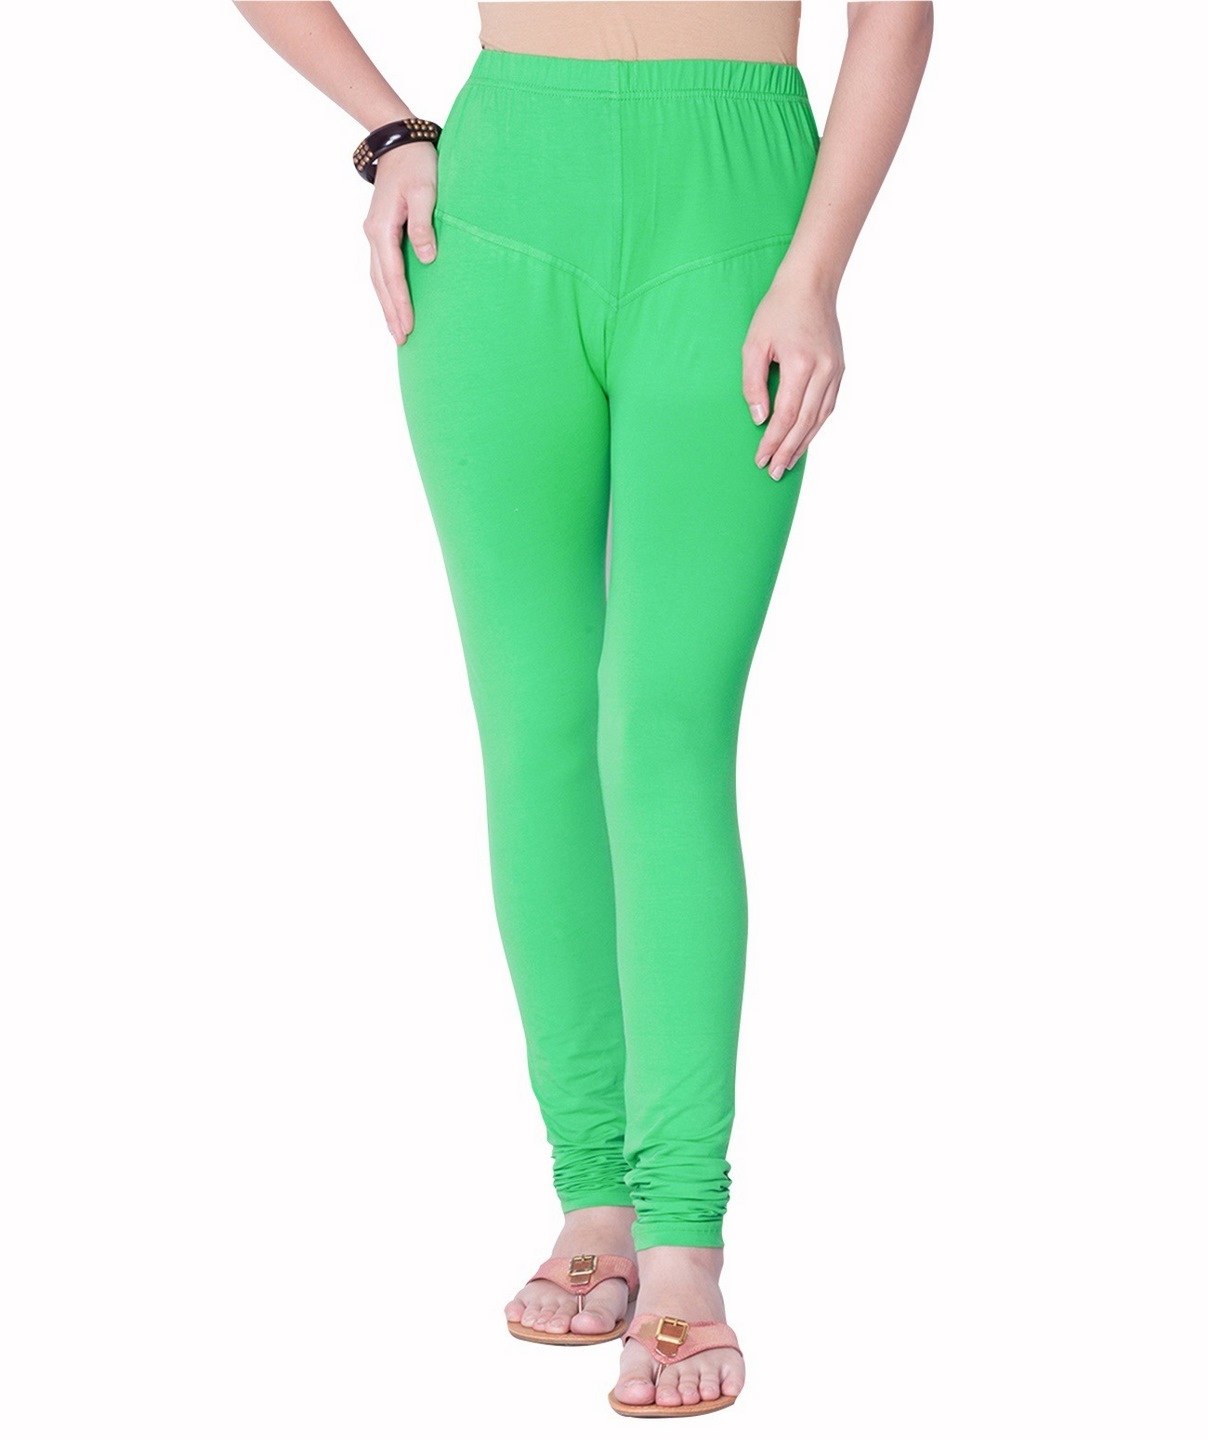 Dollar Women's Missy Pack of 1 Grass Green Color Small Size Churidar  Leggings